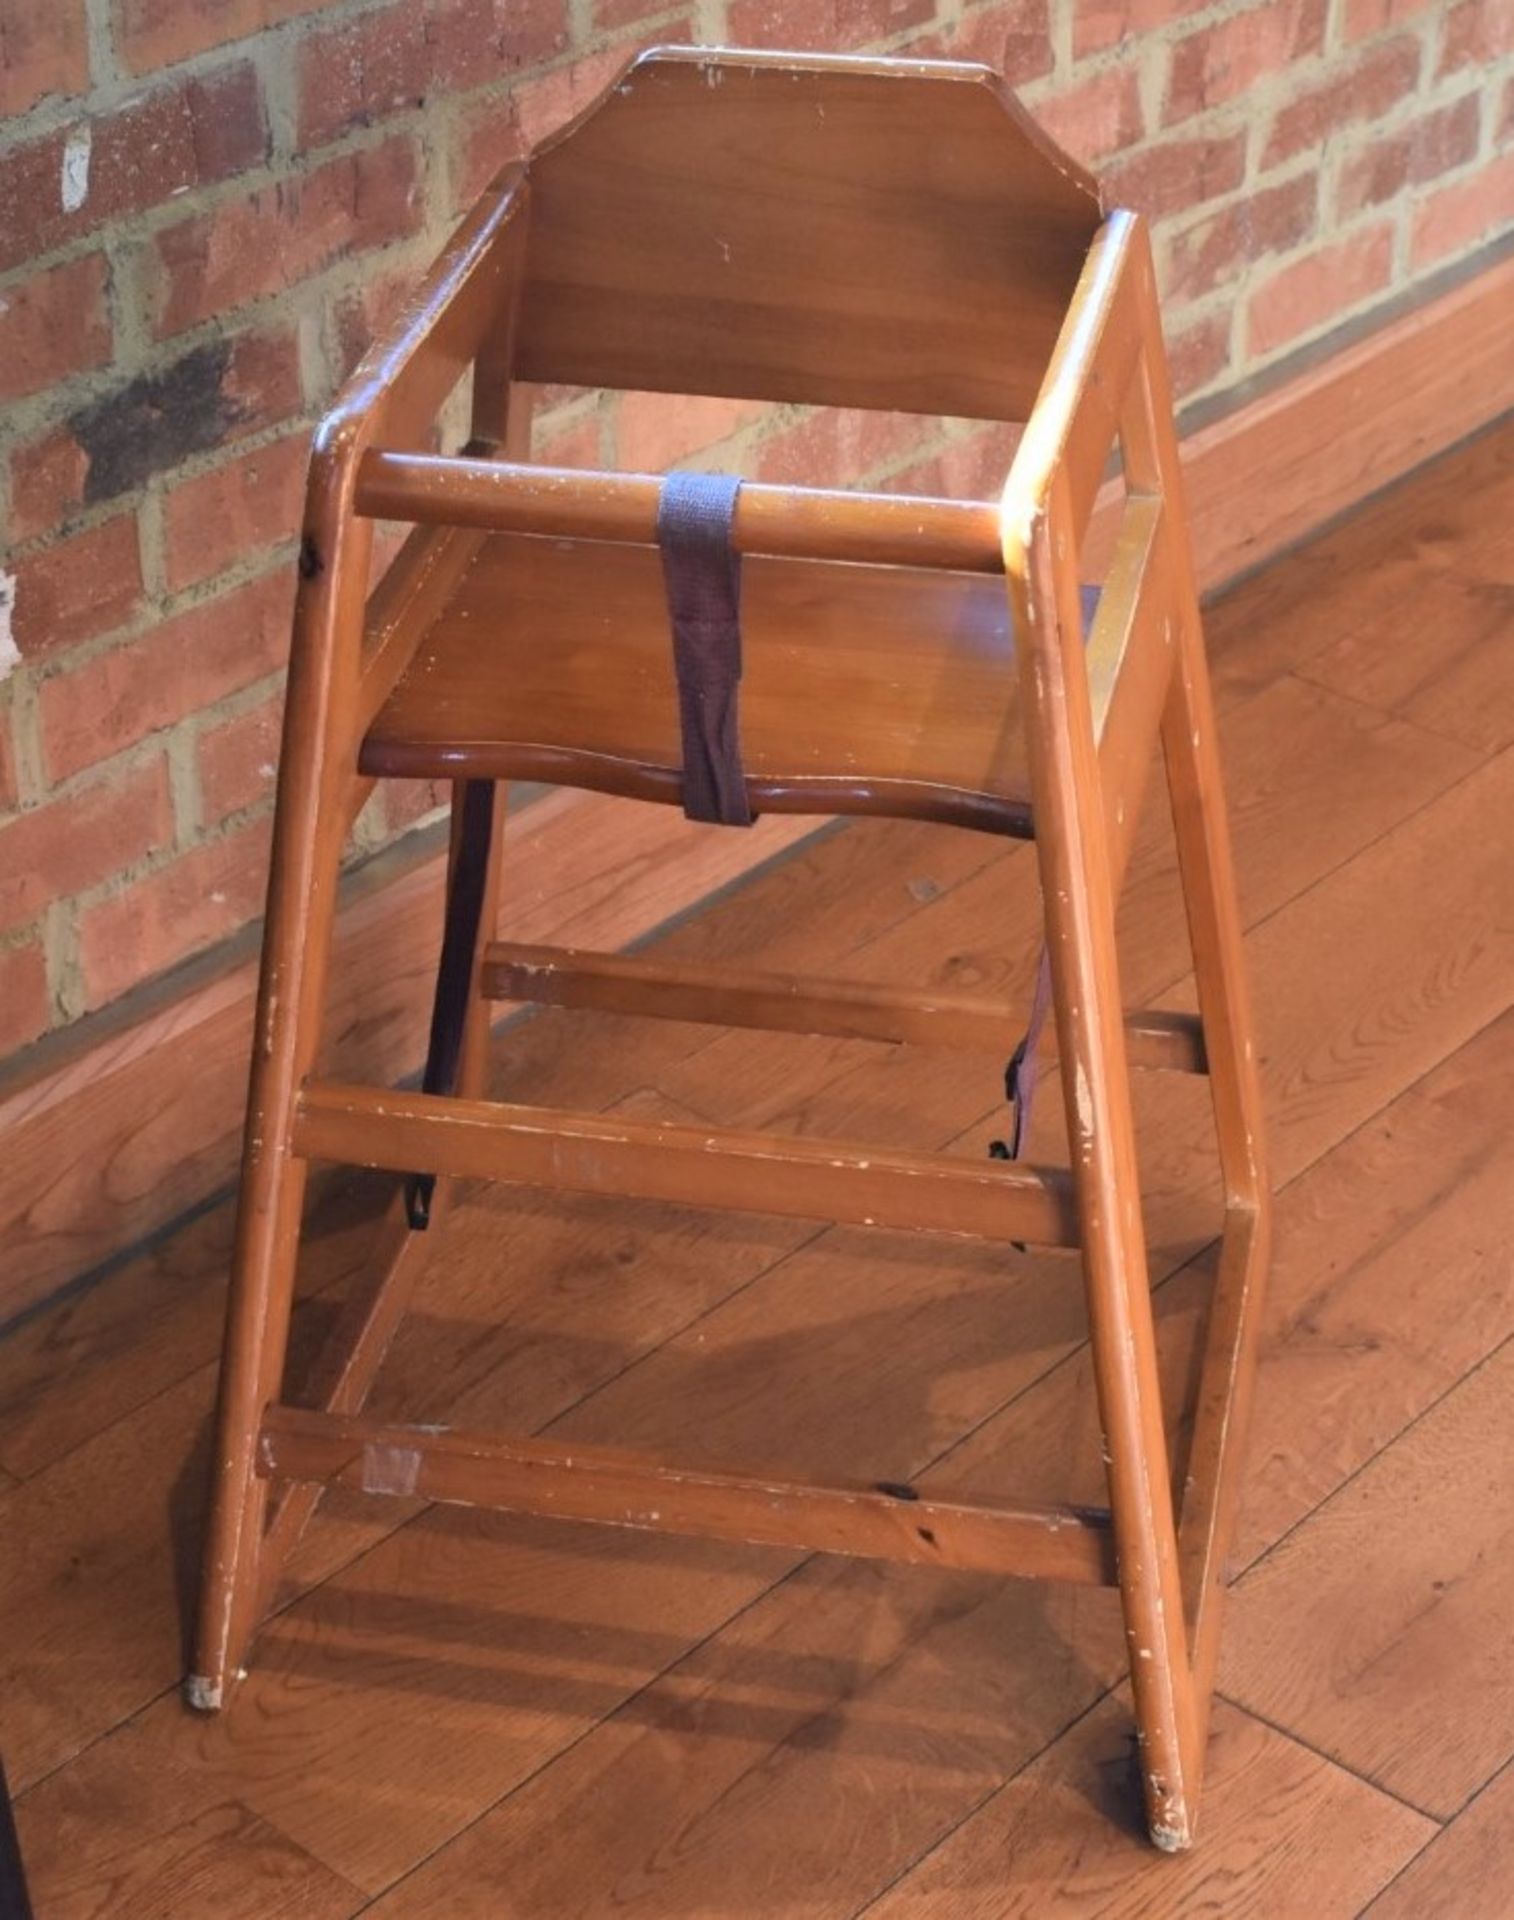 4 x Wooden Restaurant Children's High Chairs - CL499 - Location: London EN1